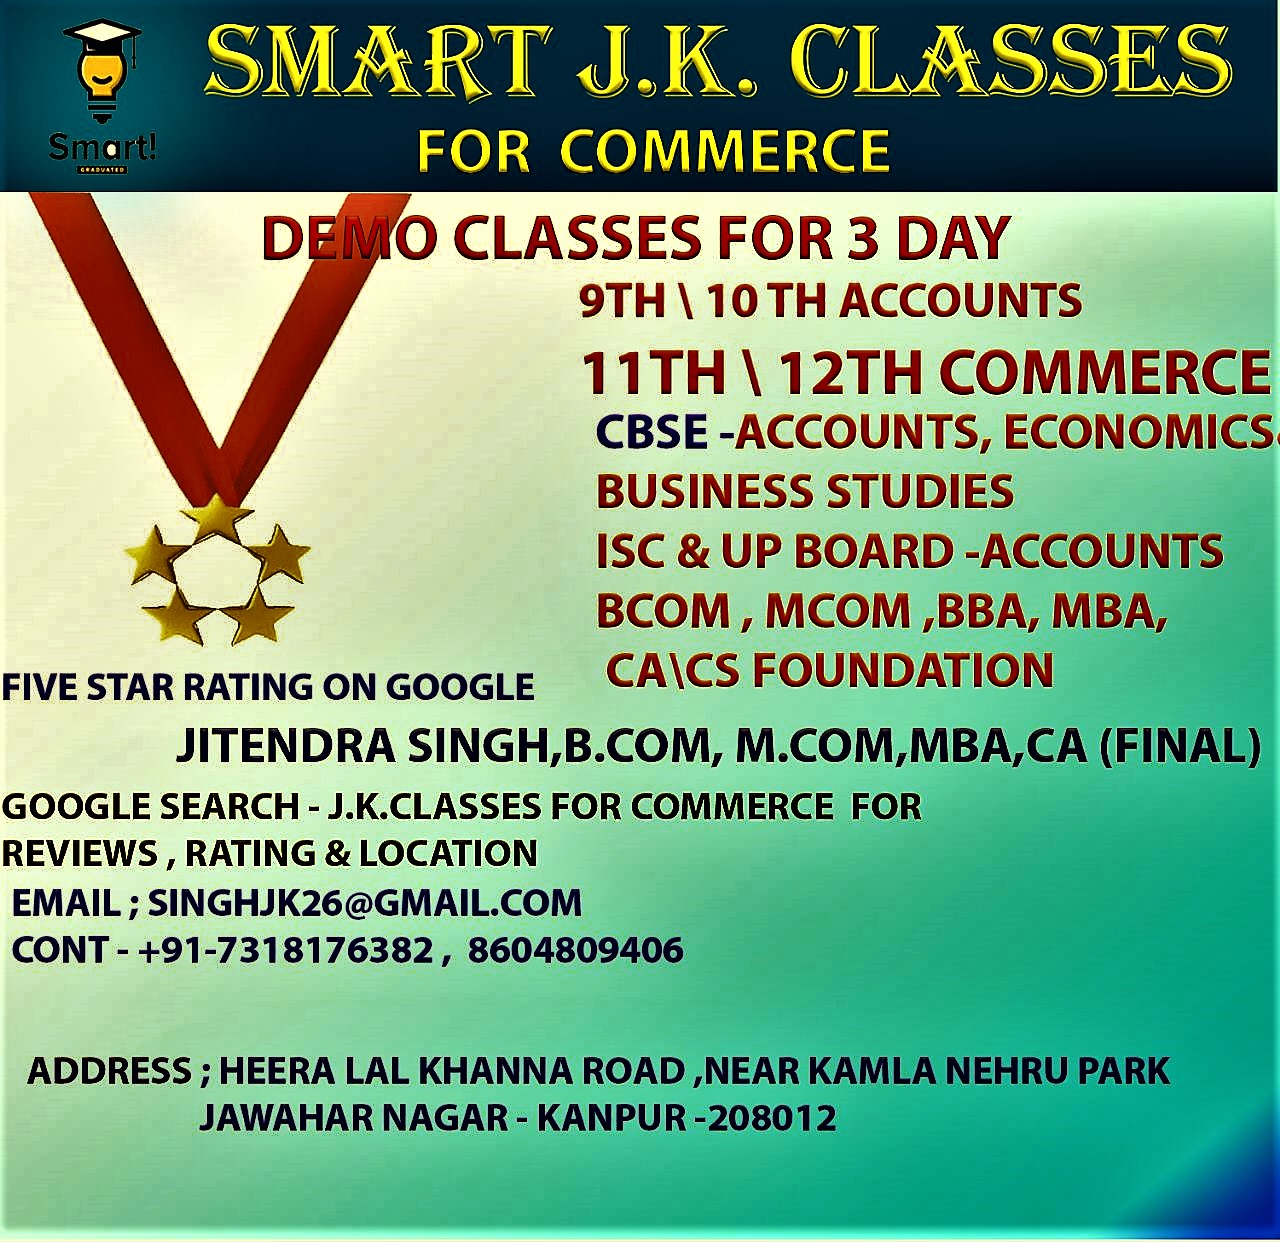 24094SMART JK.CLASSES COMMERCE
11th & 12th
Accounts Economics Business Studies